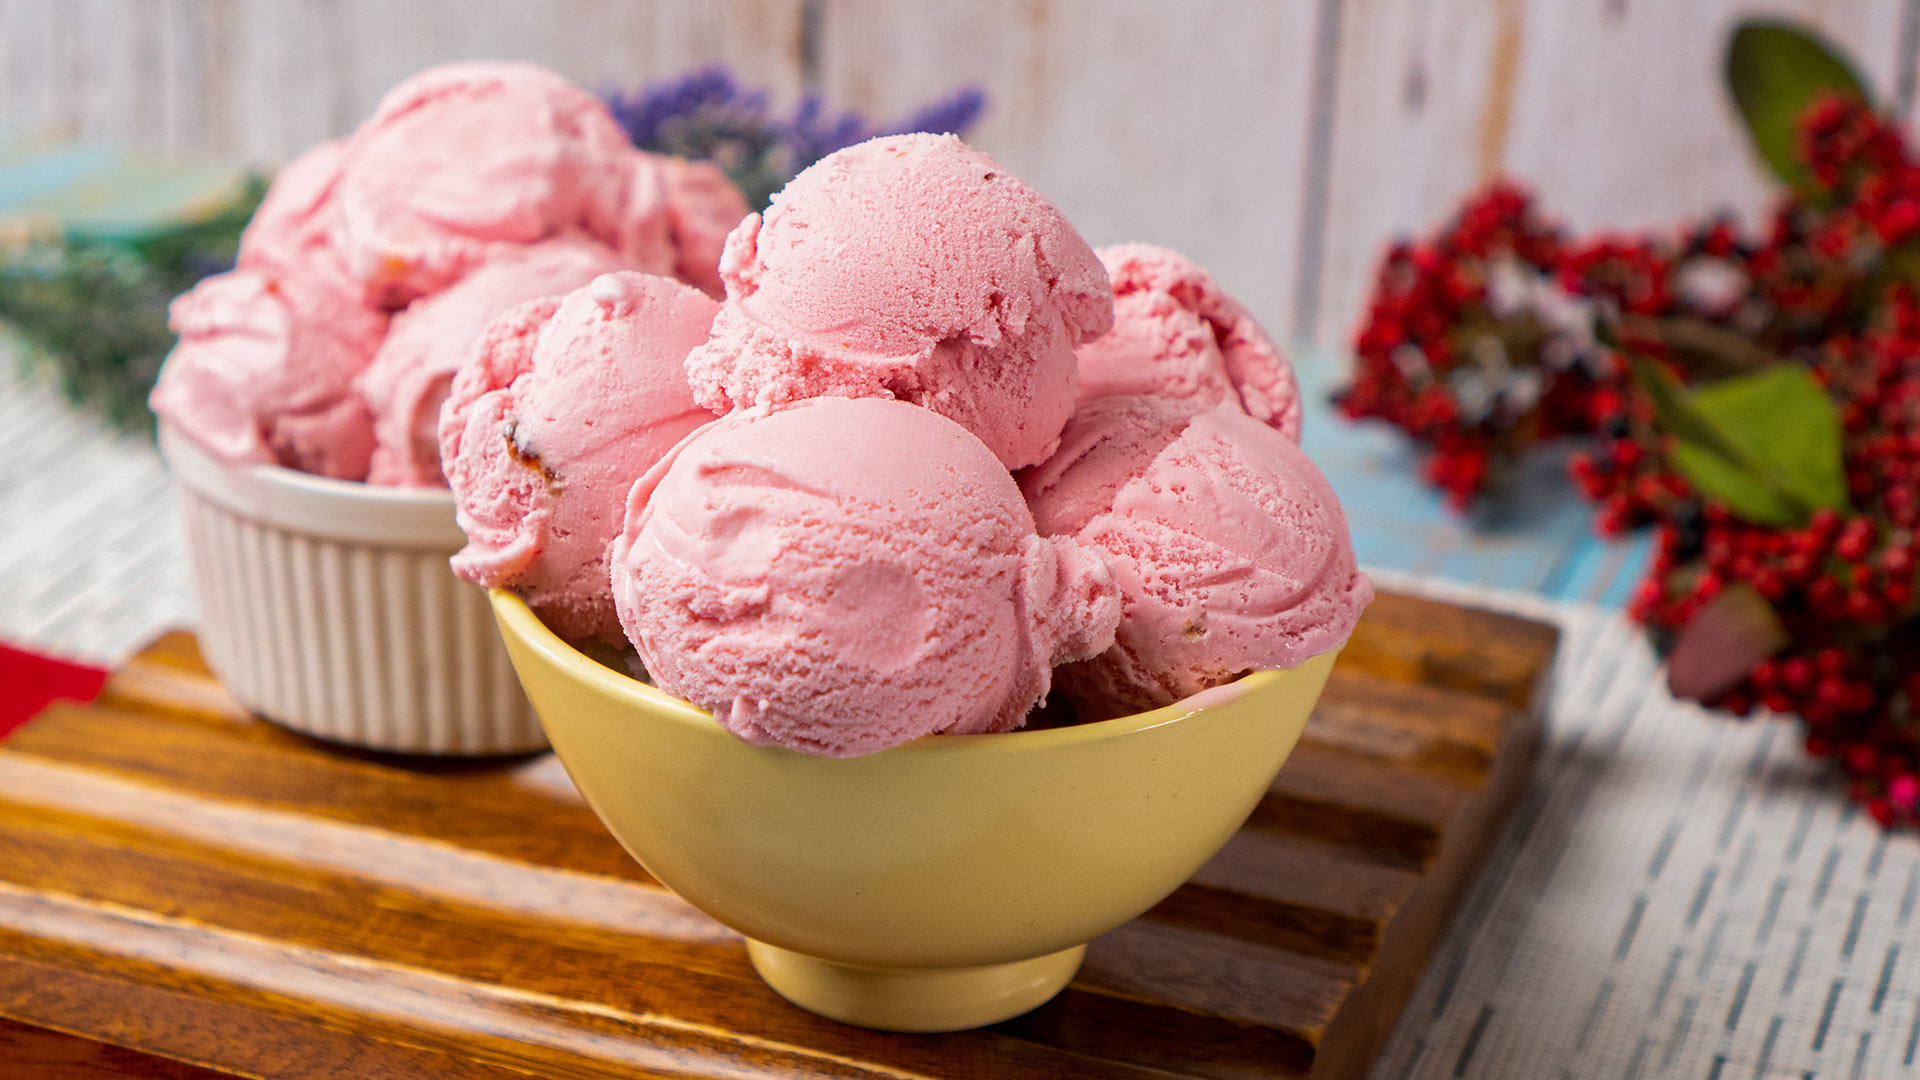 https://recipes.net/wp-content/uploads/2020/03/pink-guava-ice-cream-recipe.jpg